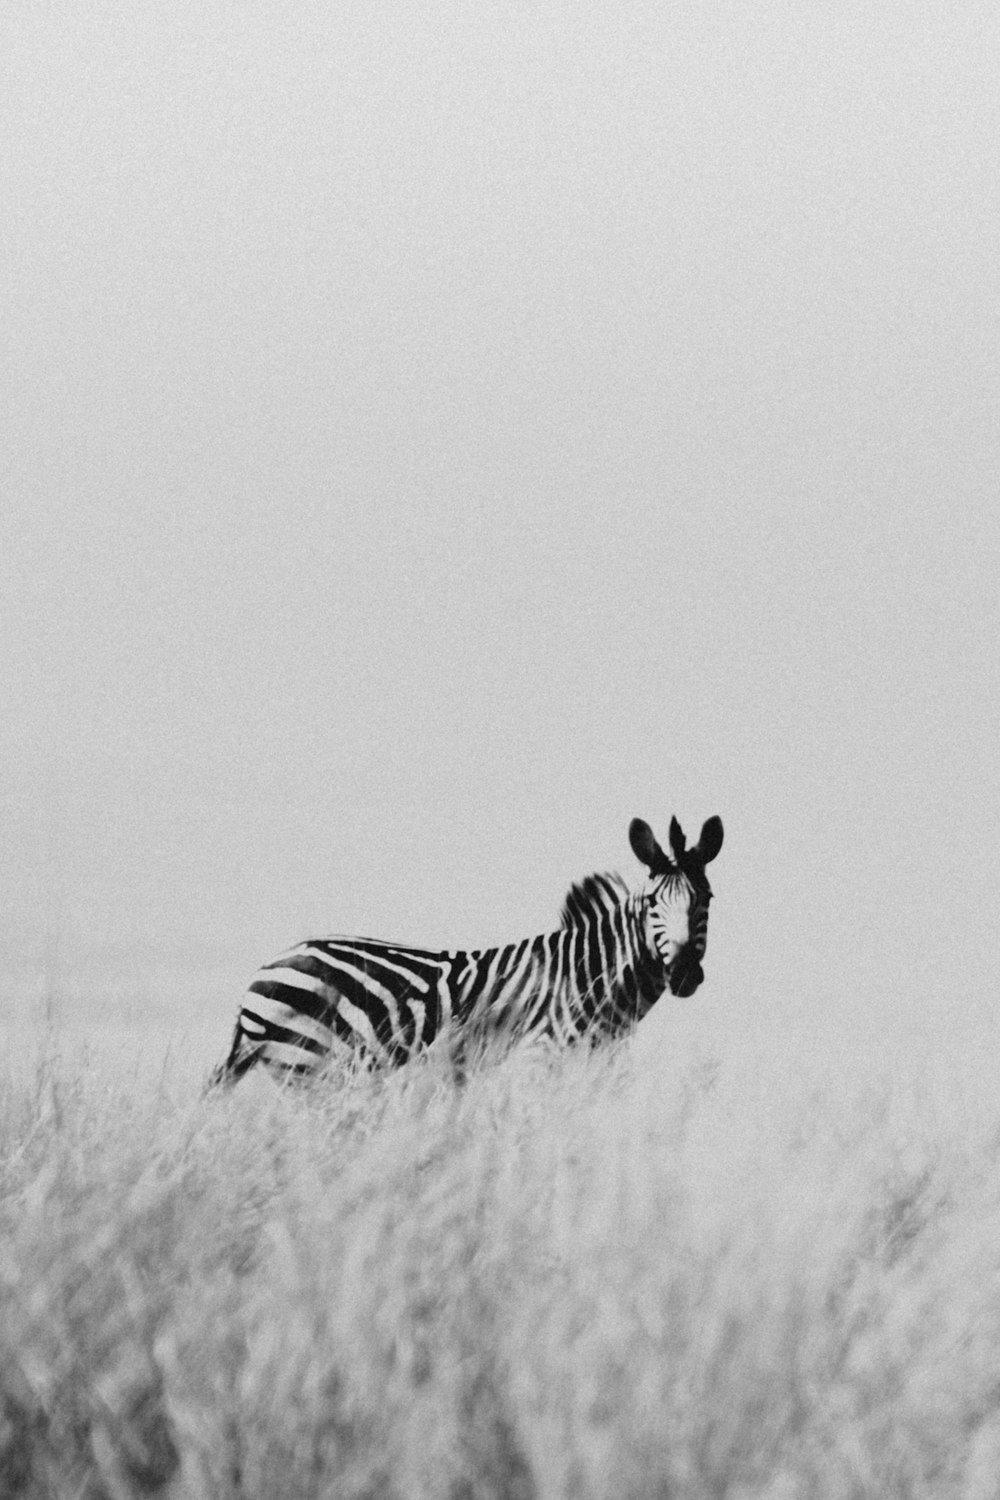 a black and white photo of a zebra in a field